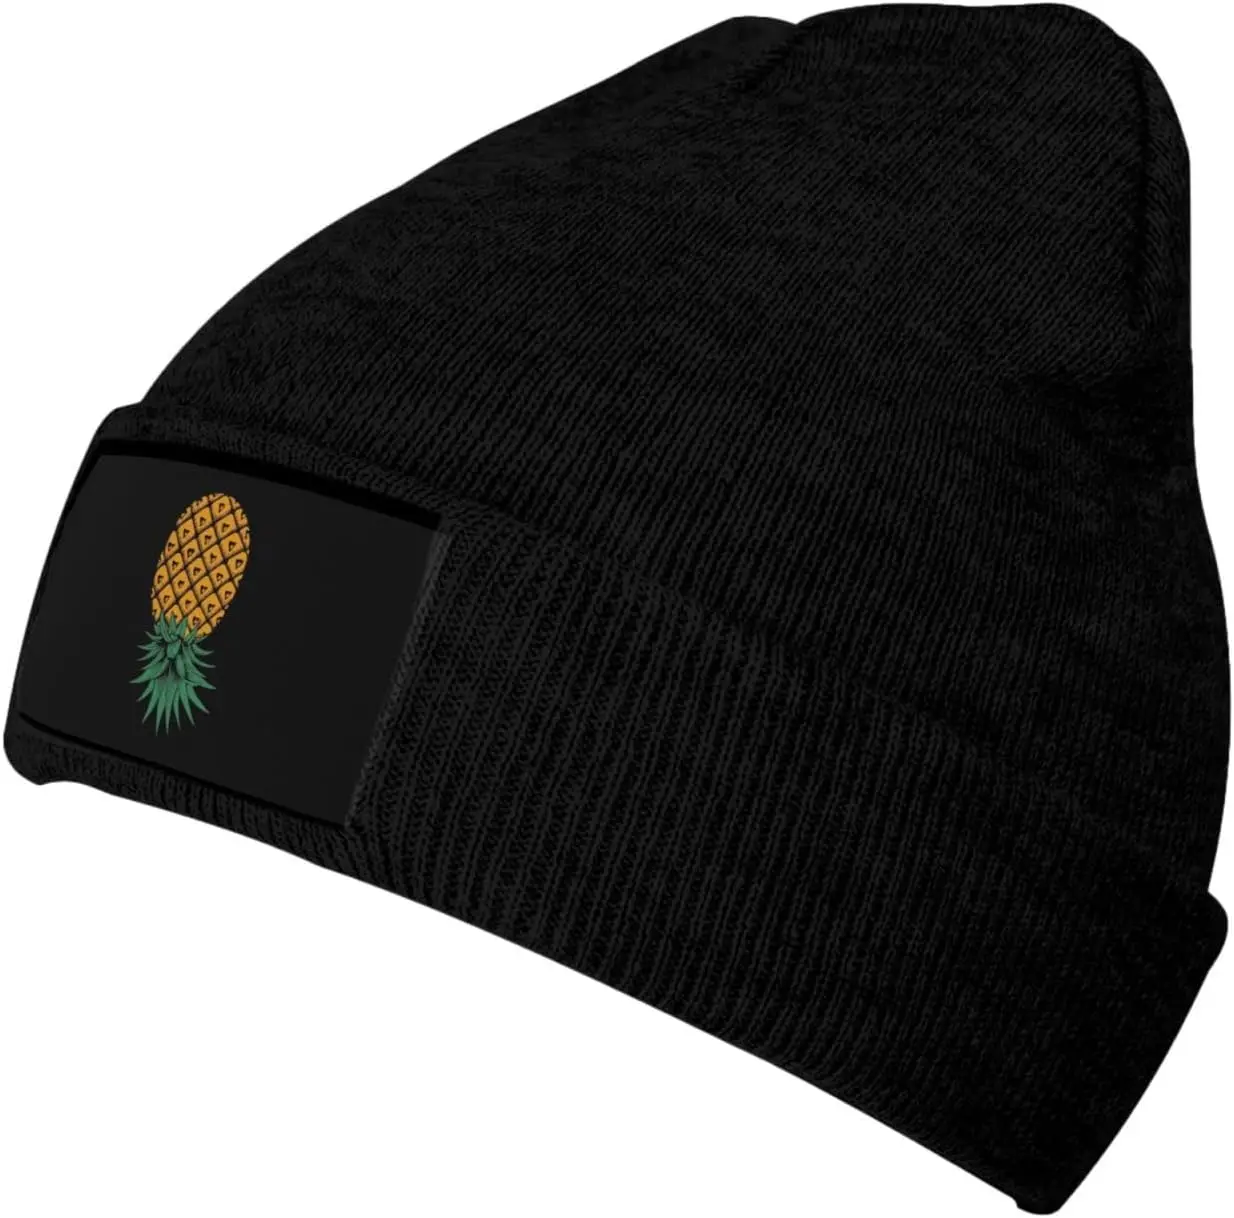 

Upside Down Pineapple Beanie Hat Unisex Winter Warm Knitted Hat Black